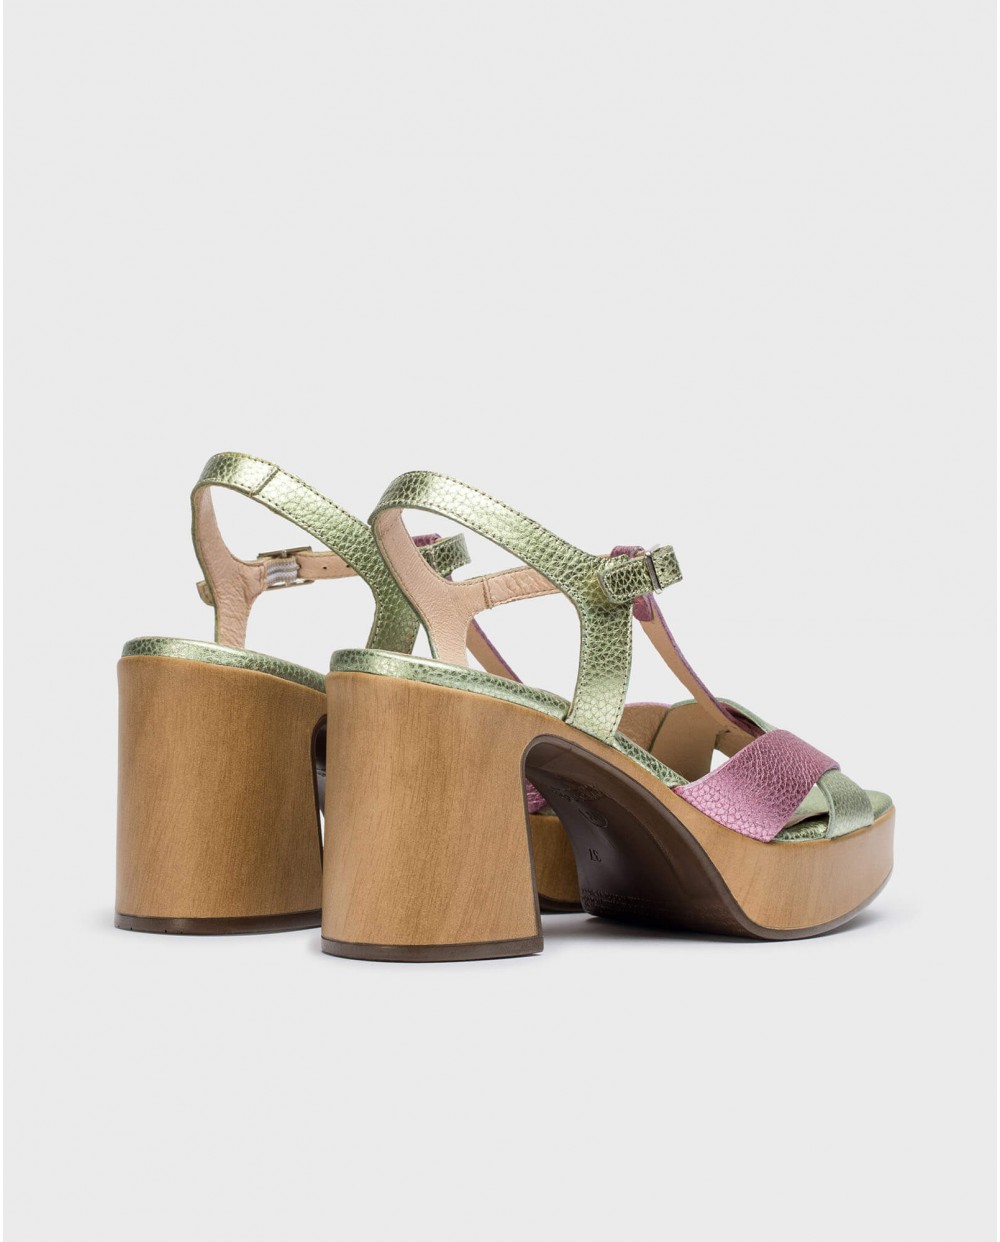 Bicolor Julia sandals